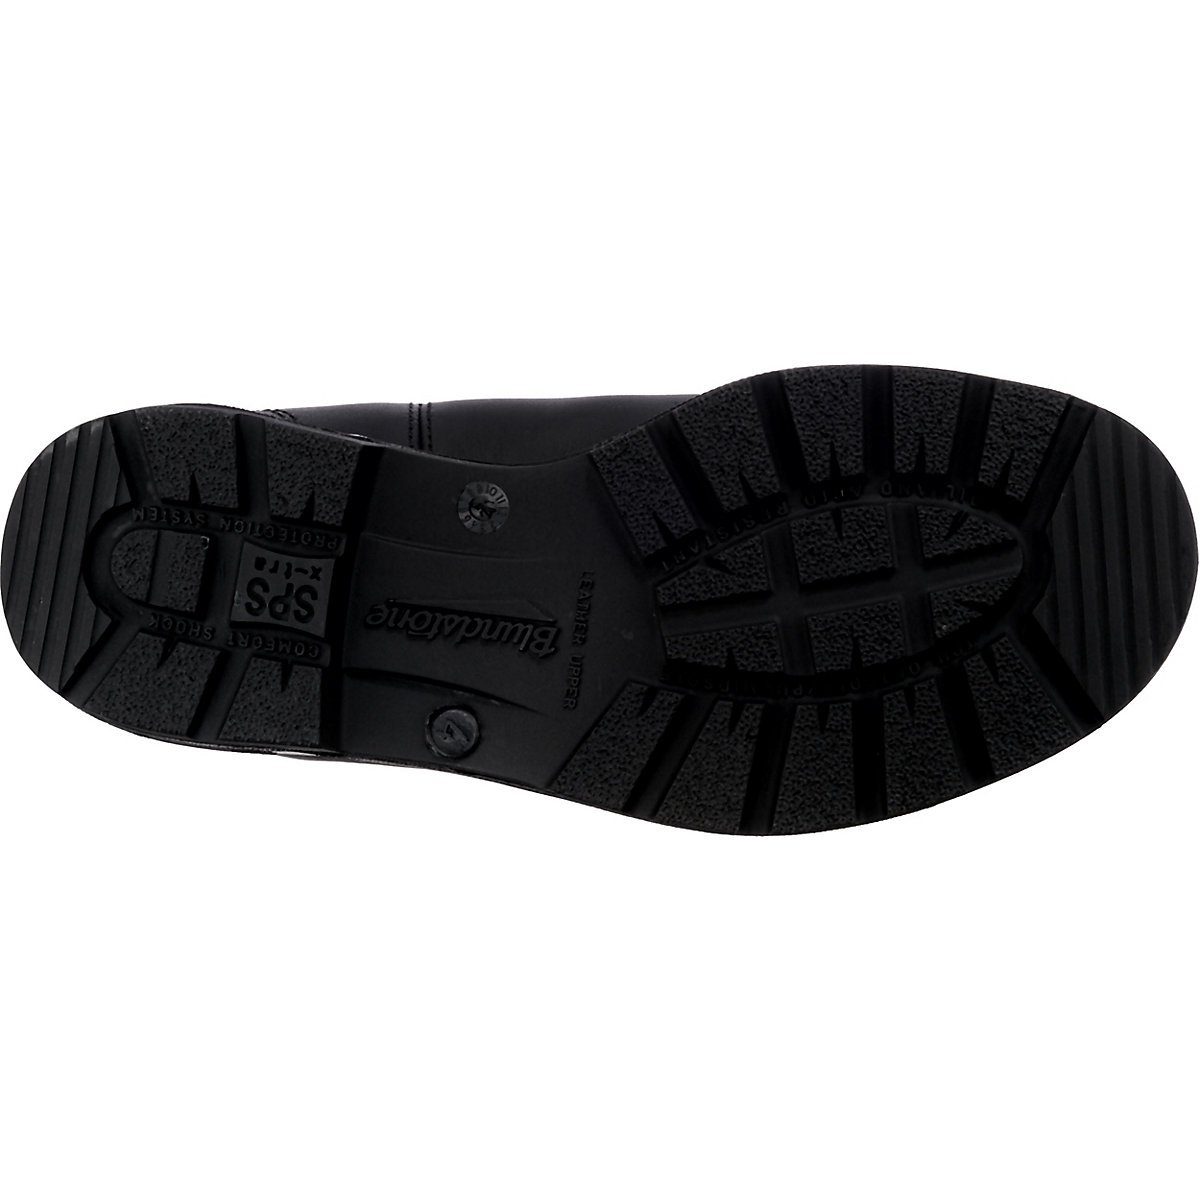 Schuhe Boots Blundstone 566 Black Waterproof Leather (warm & Dry) Chelsea Chelseaboots